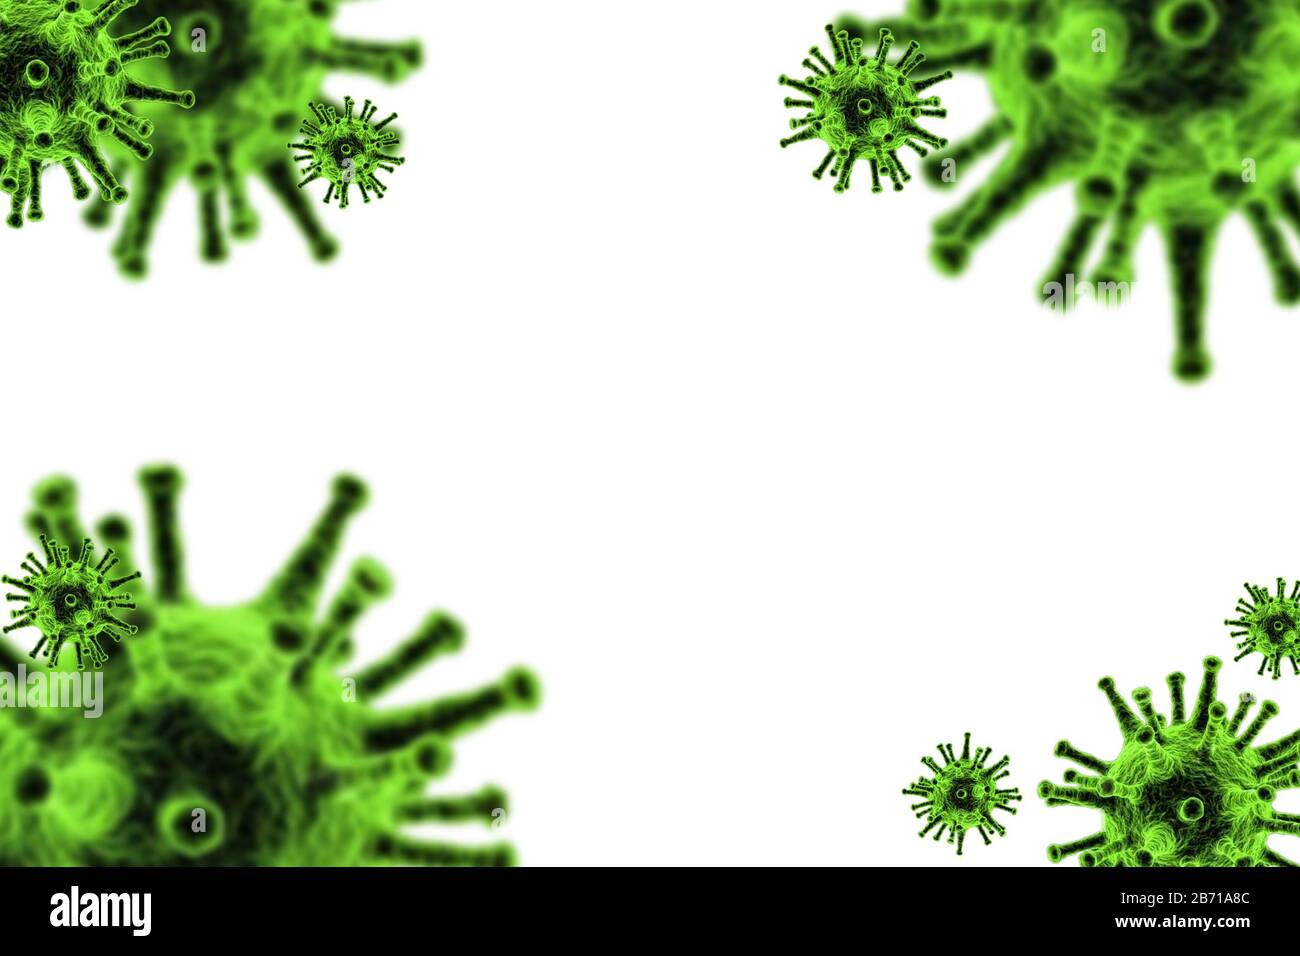 Corona virus attack concept, many green virus attack isolated on white background Stock Photo